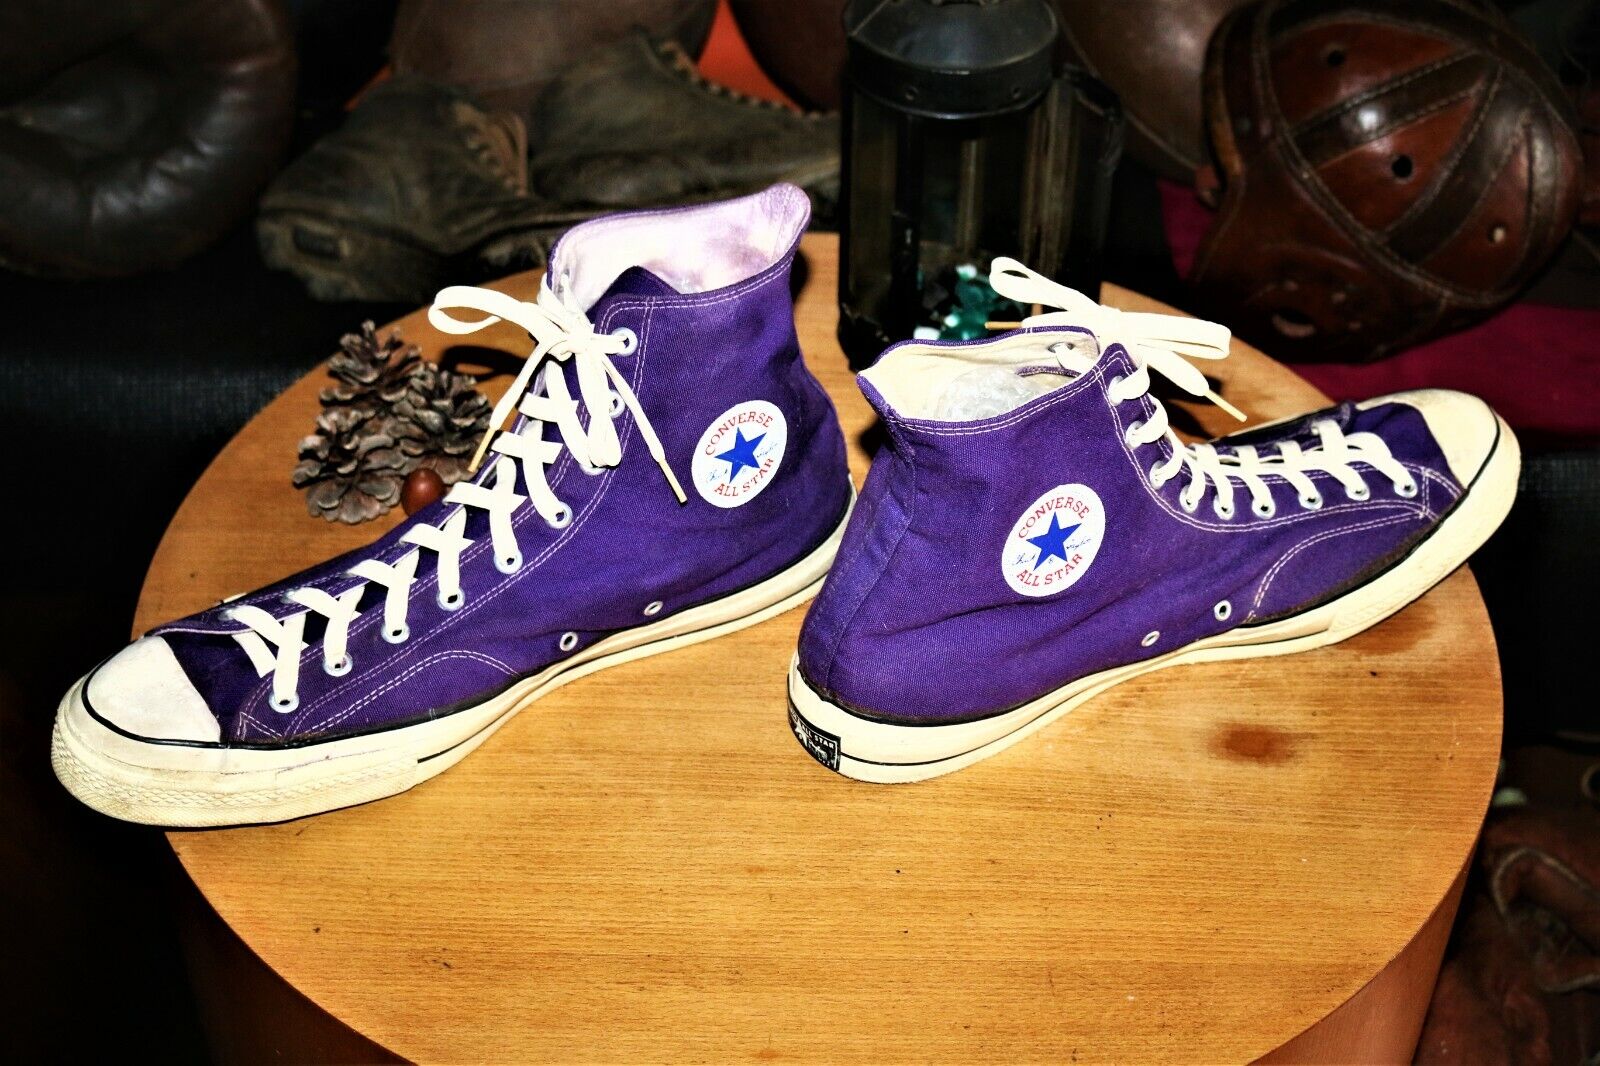 Vintage Basketball Sneakers, converse size 17 huge, purple